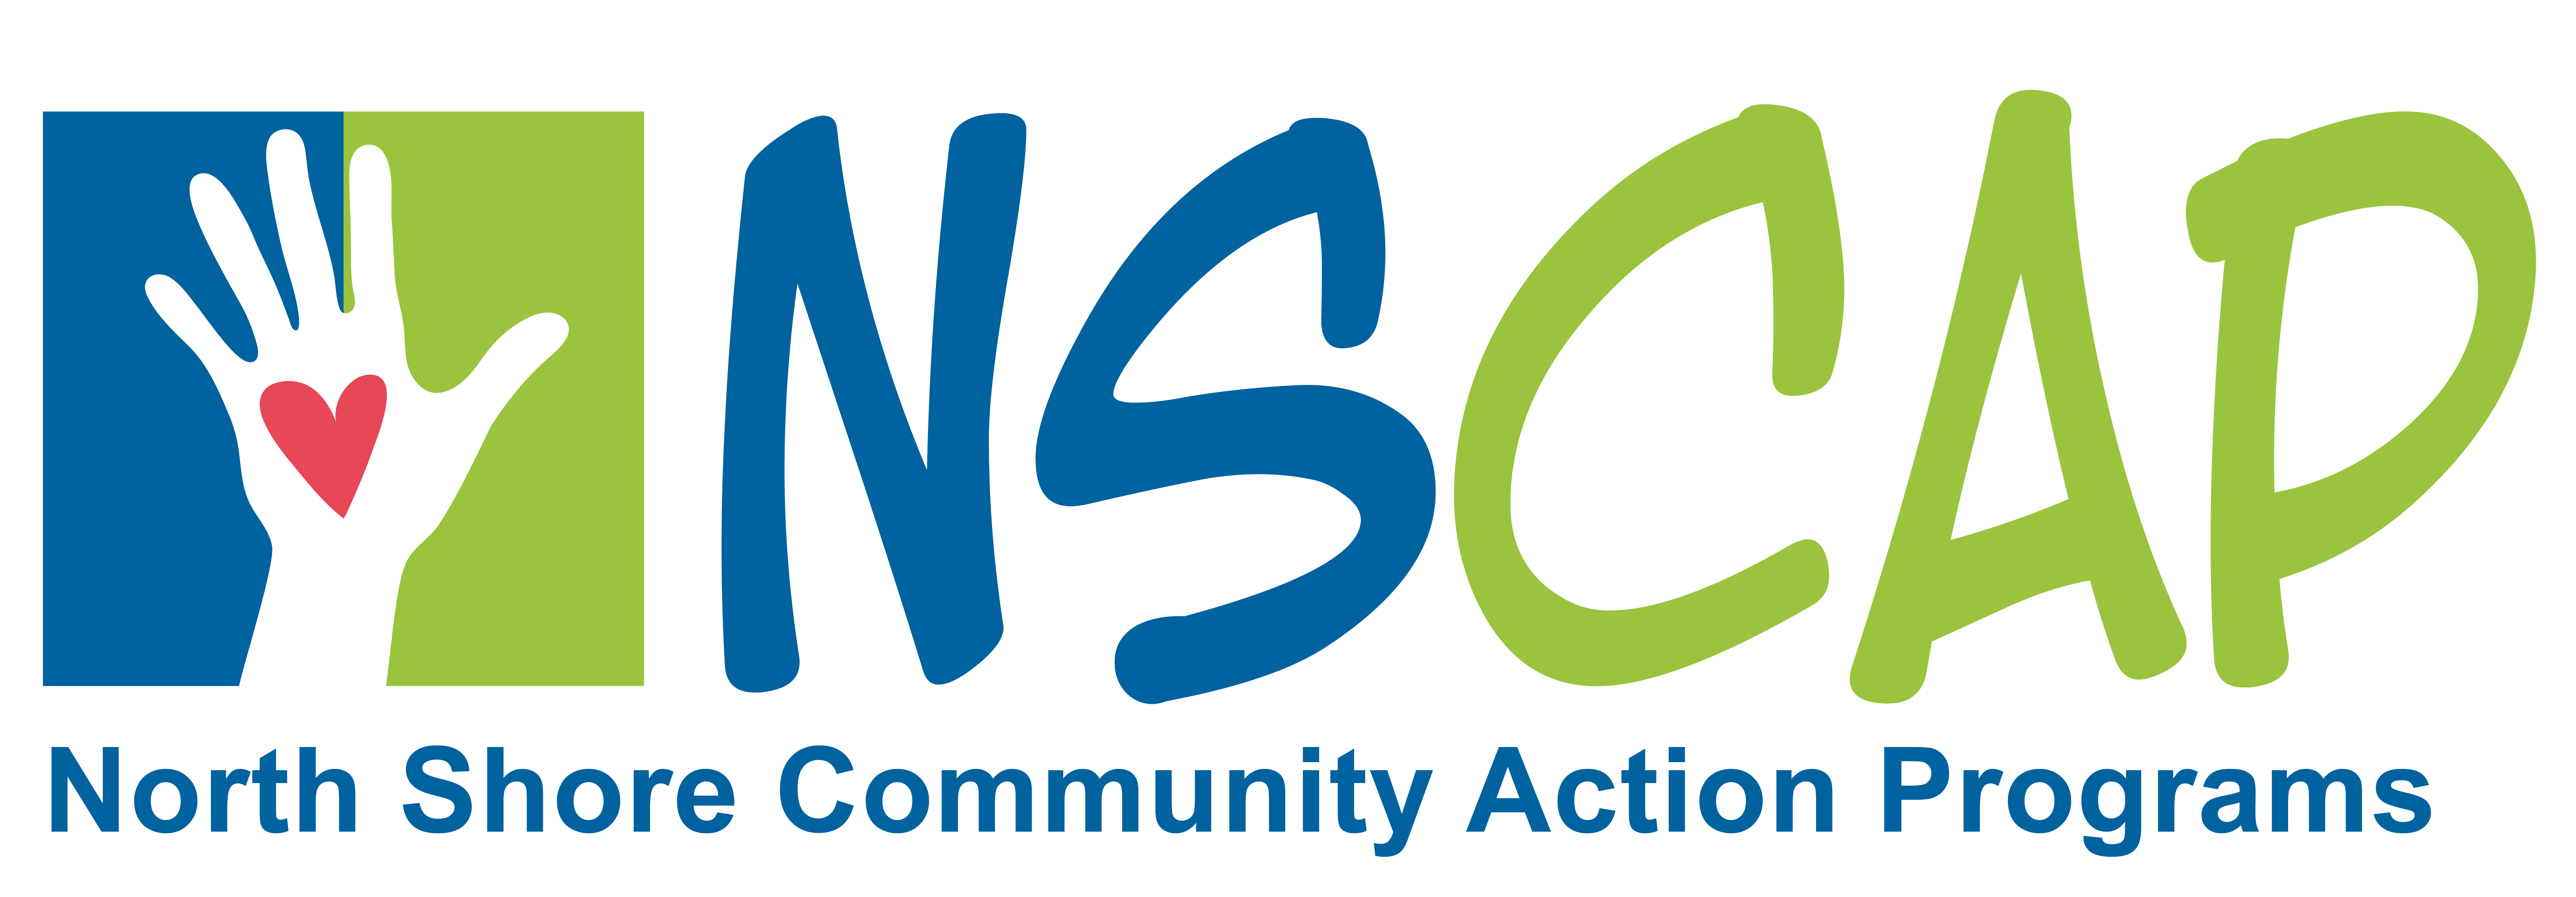 North Shore Community Action Programs